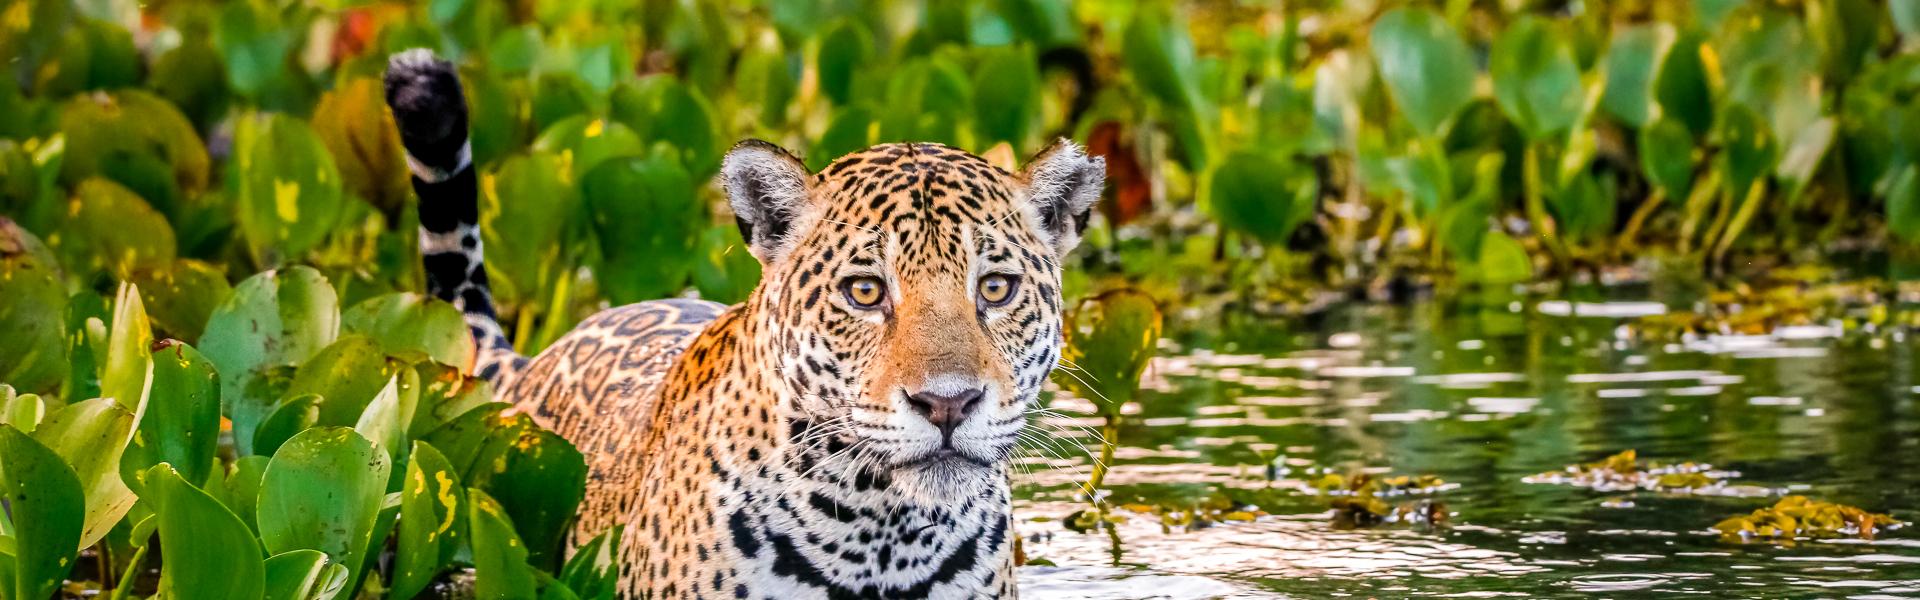 Junger Jaguar im Wasser des Pantanal |  Uwe Bergwitz, iStockphoto.com / Chamleon